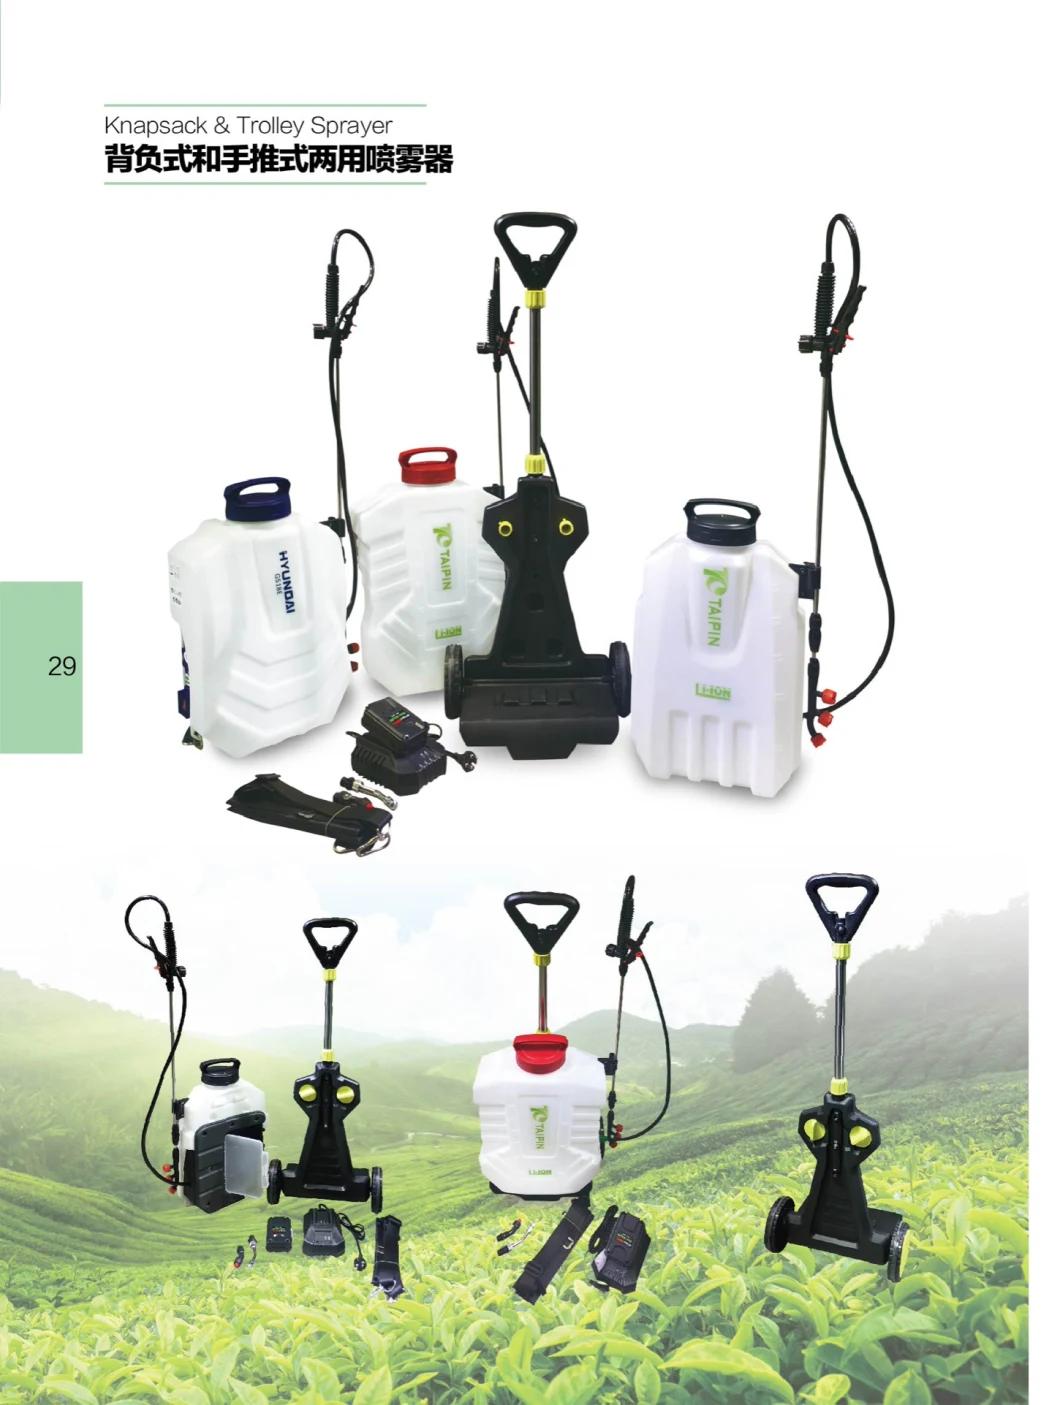 Sprayer for Weed Killer Knapsack Manual Sprayer Heavy Duty Suitable for Electric Agricultural Gardening Backpack Garden Spraye